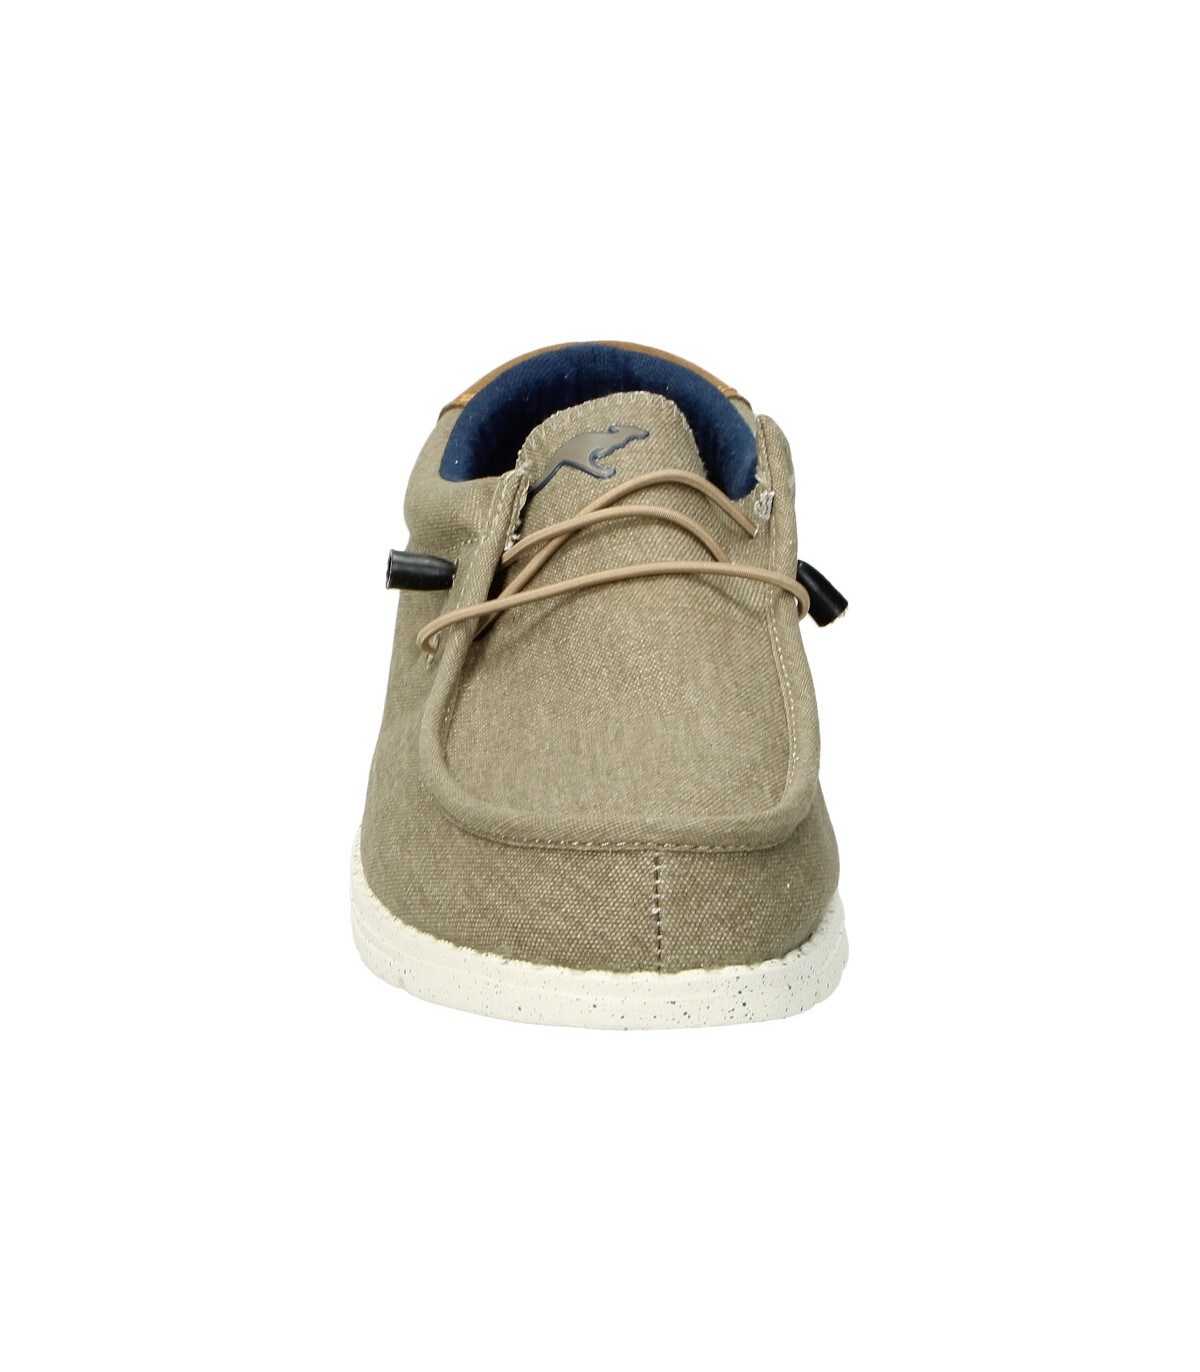 Zapatos cómodo de hombre KANGAROOS k774-4 color azul